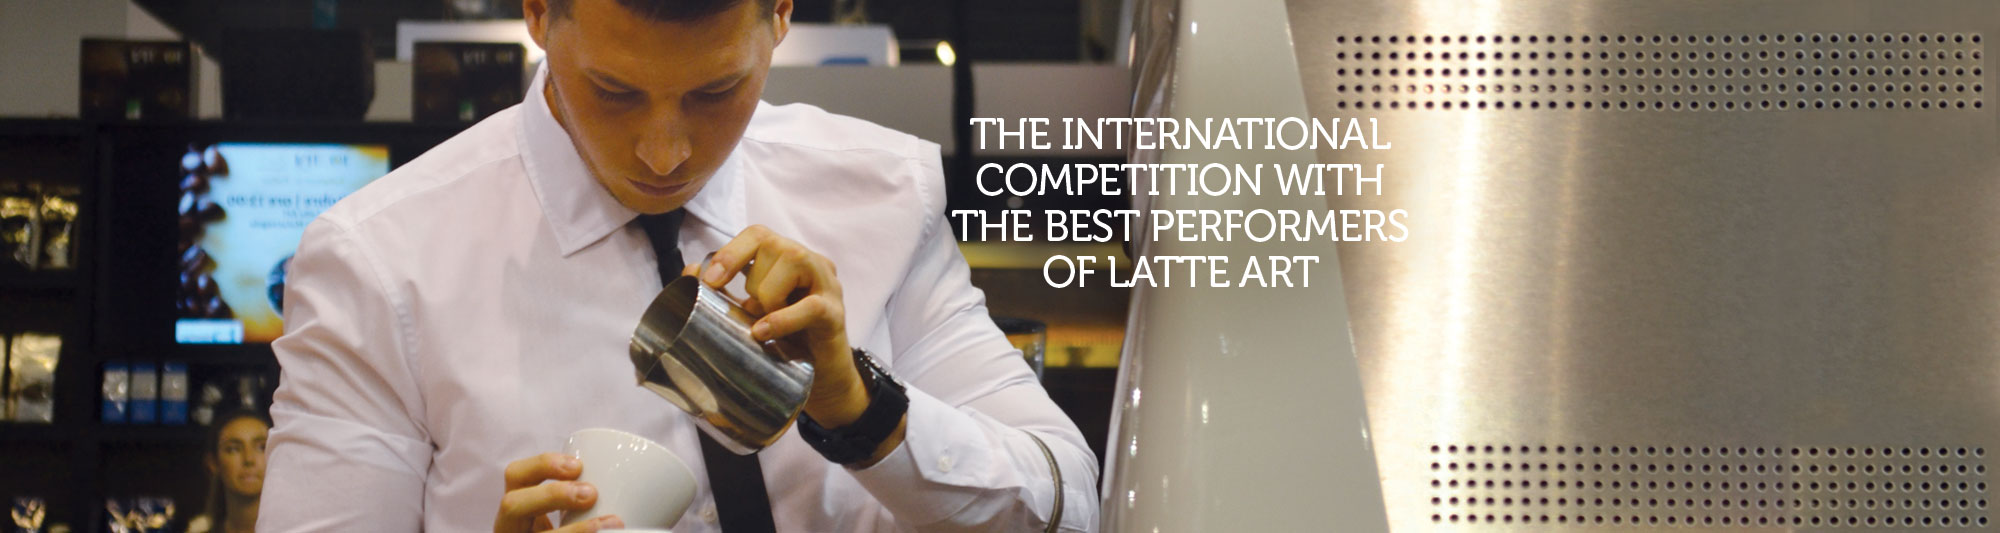 Milano latte art challenge